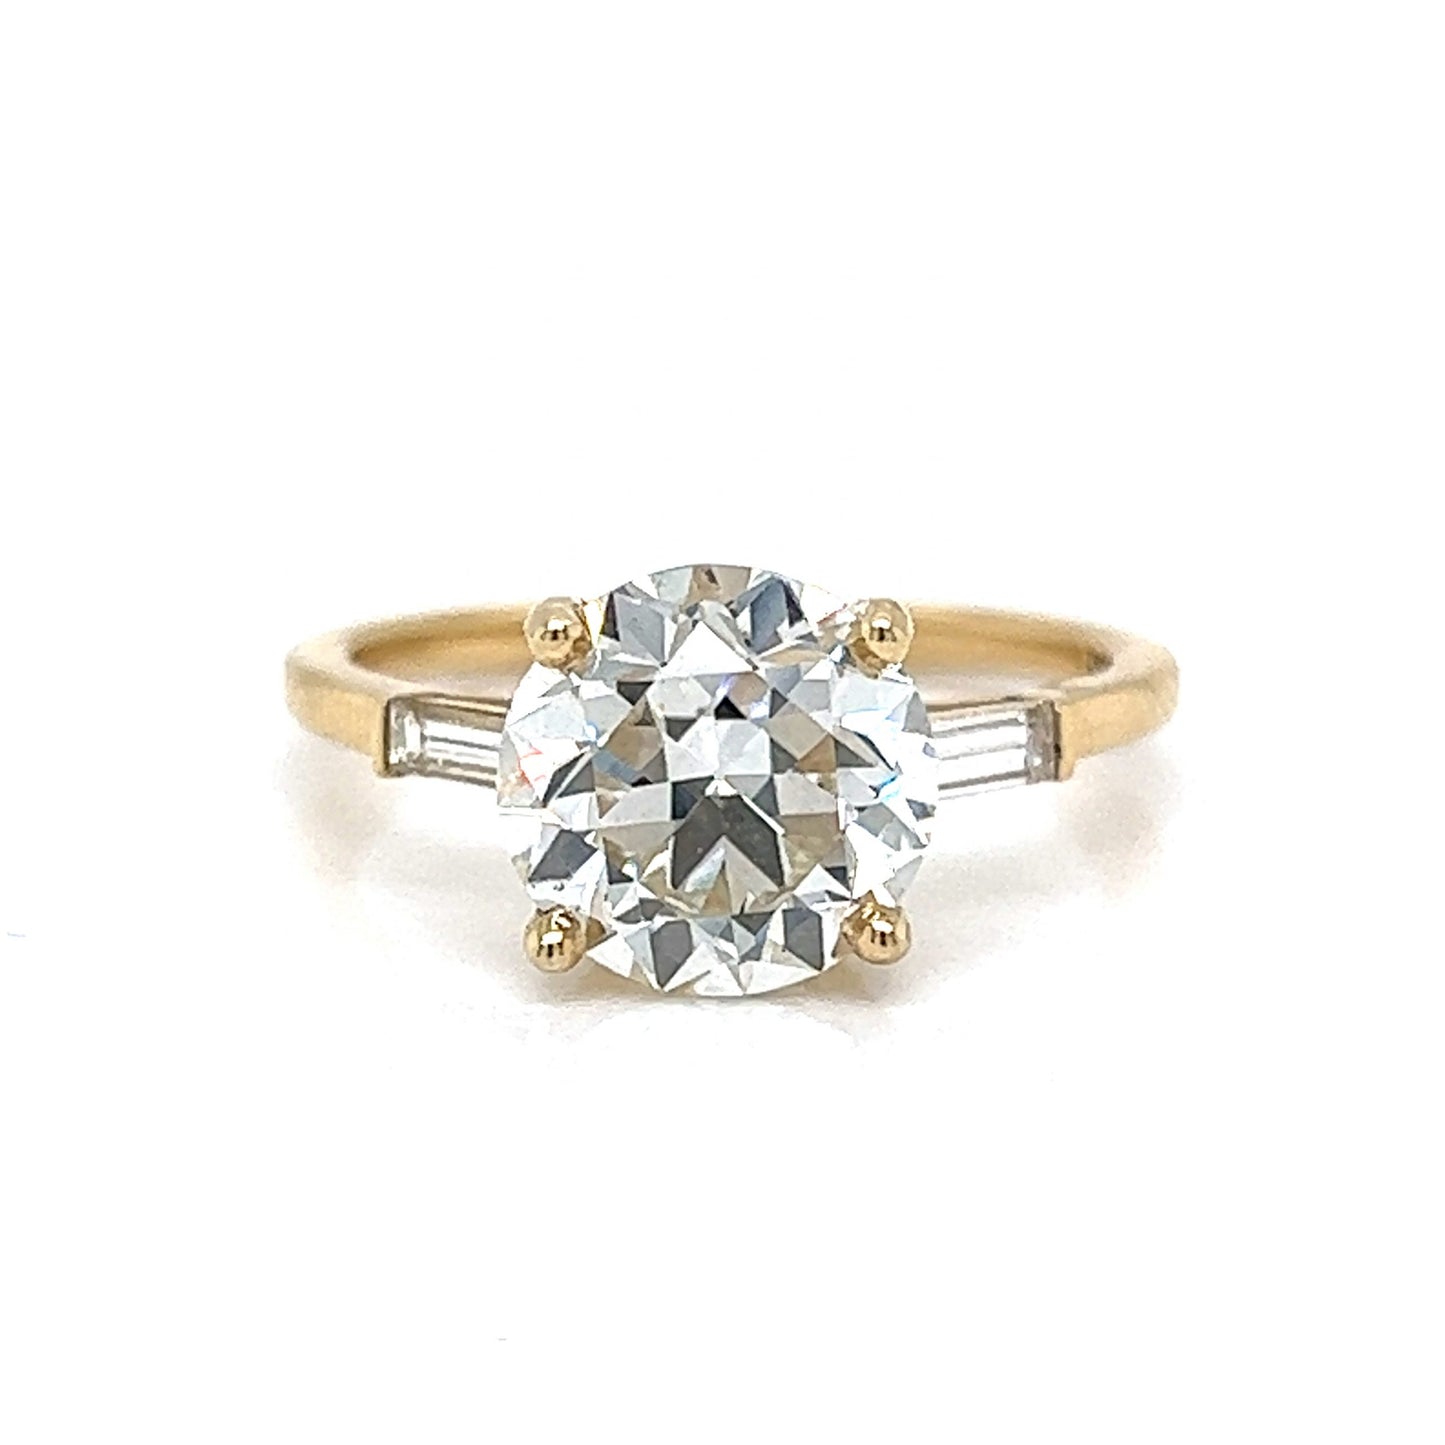 2.61 Round Brilliant Diamond Engagement Ring in 14k Gold